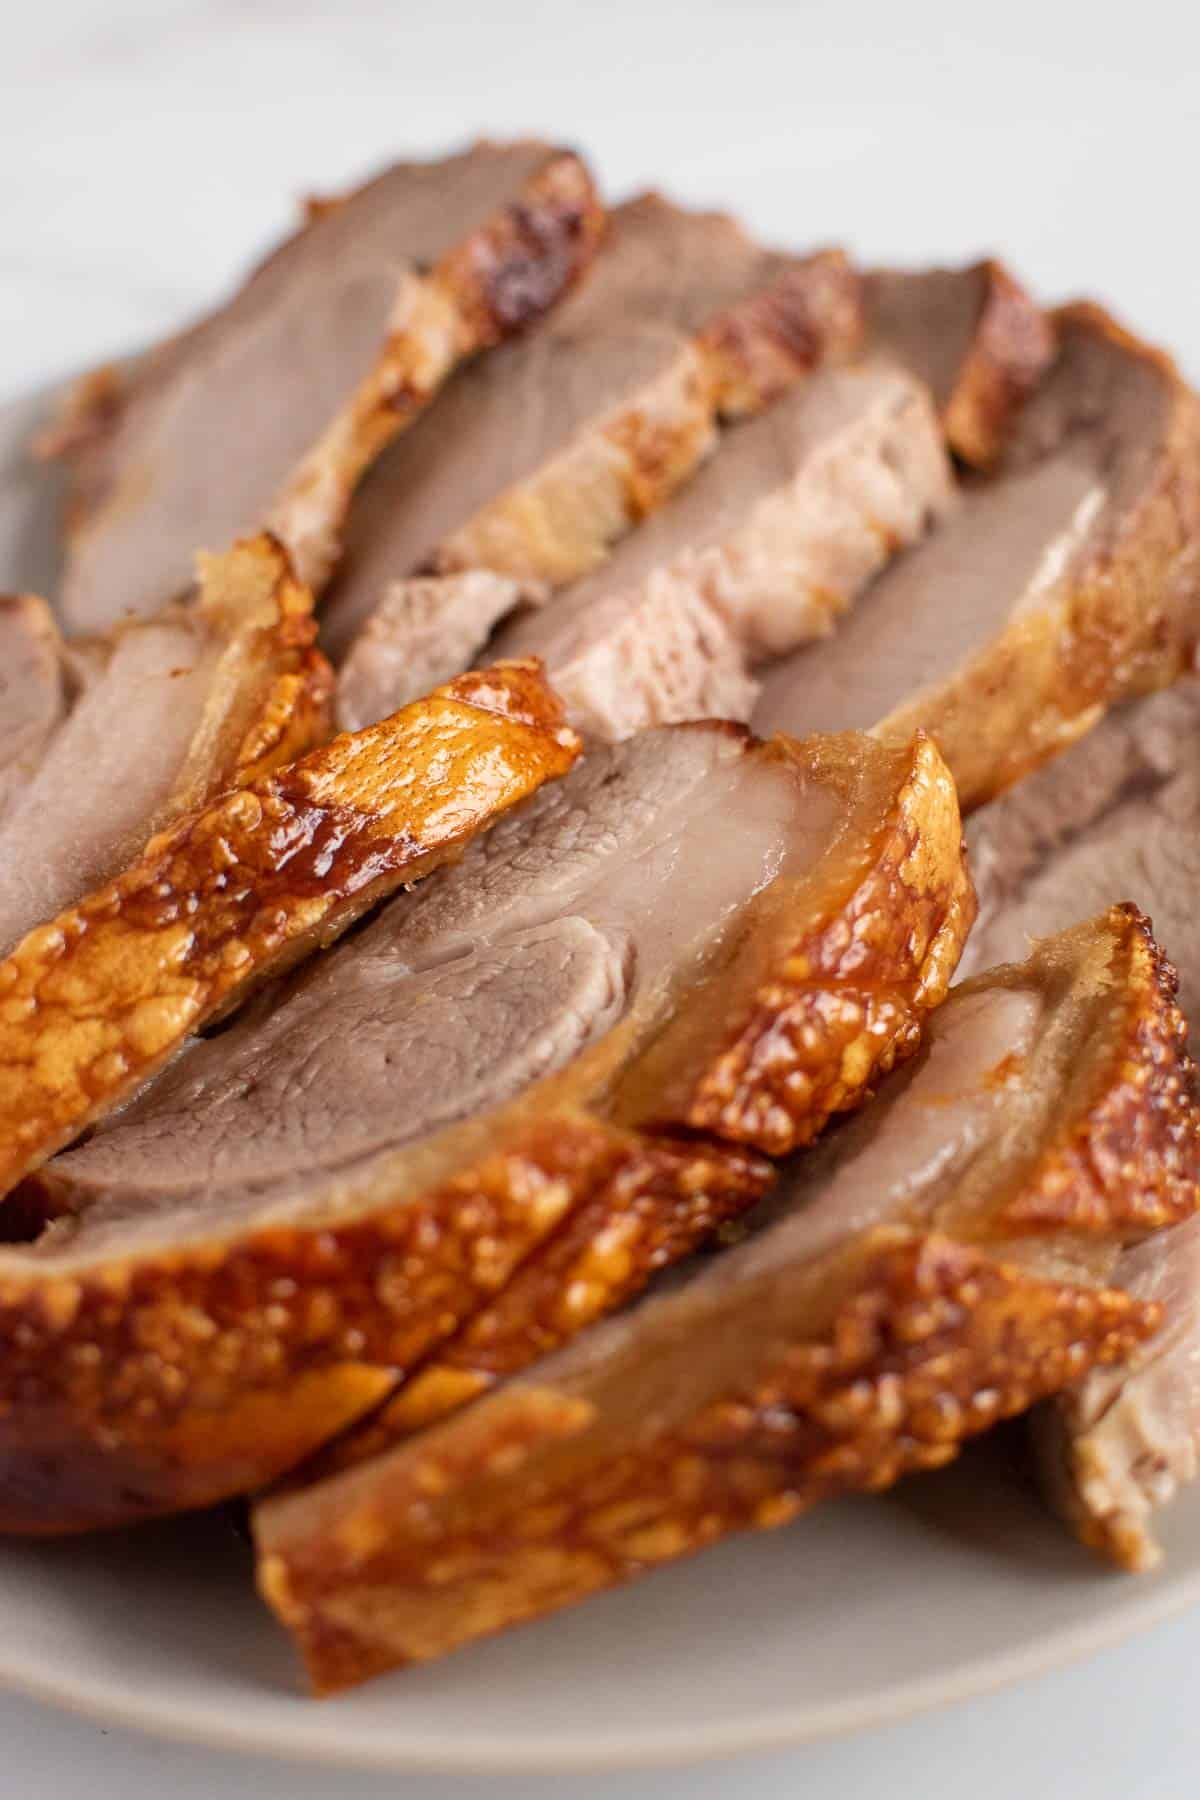 Close up image of pork roast with crackling.